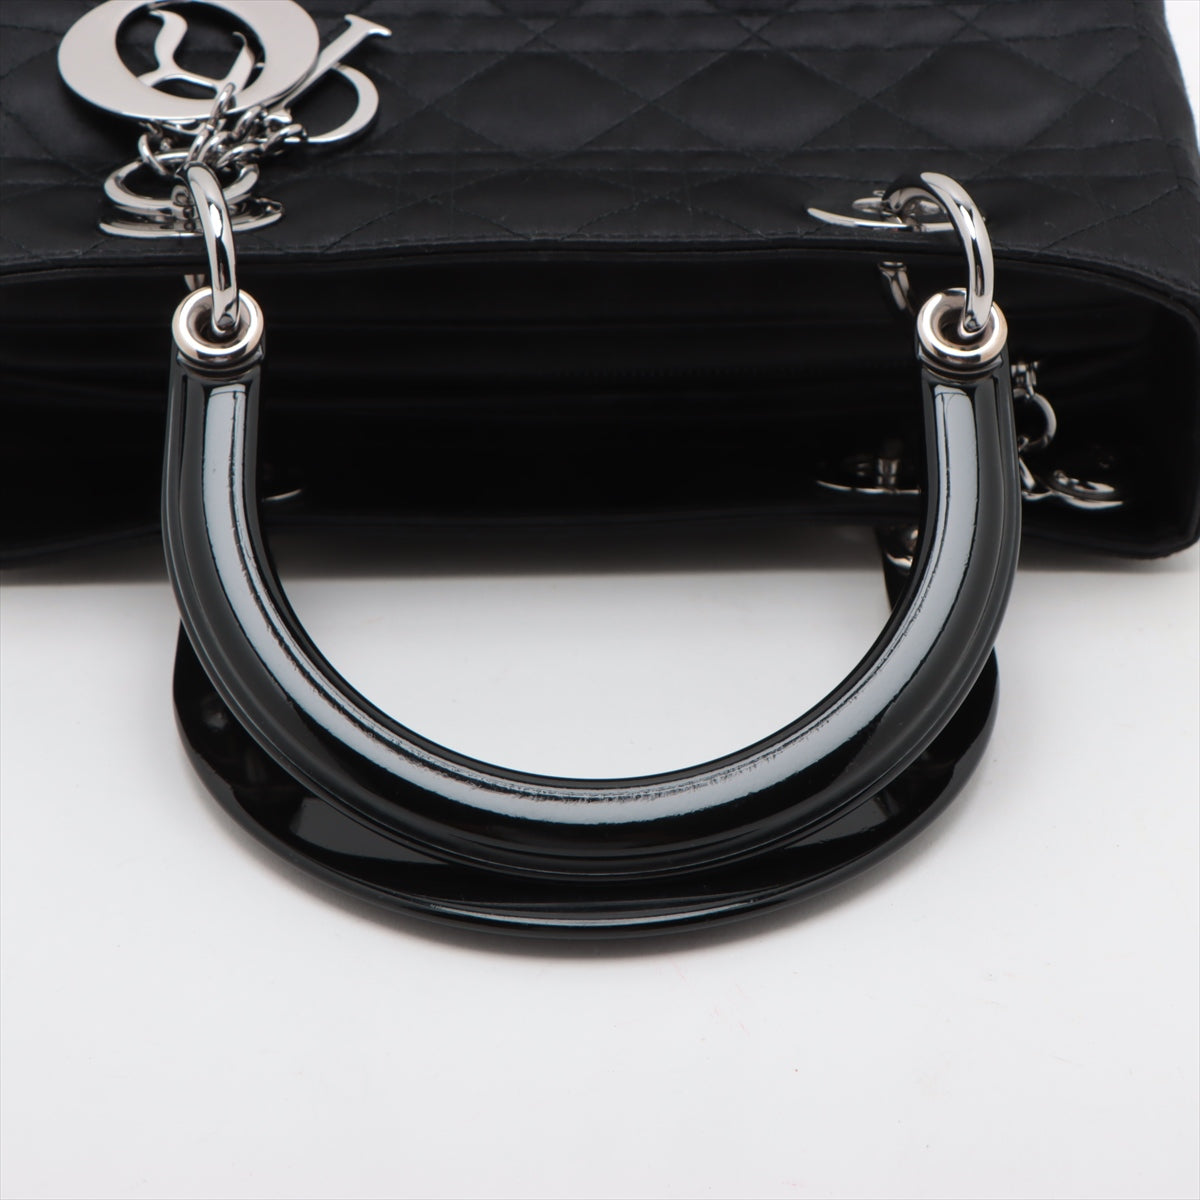 Christian Dior Lady Dior Cannage Satin Handbag Black